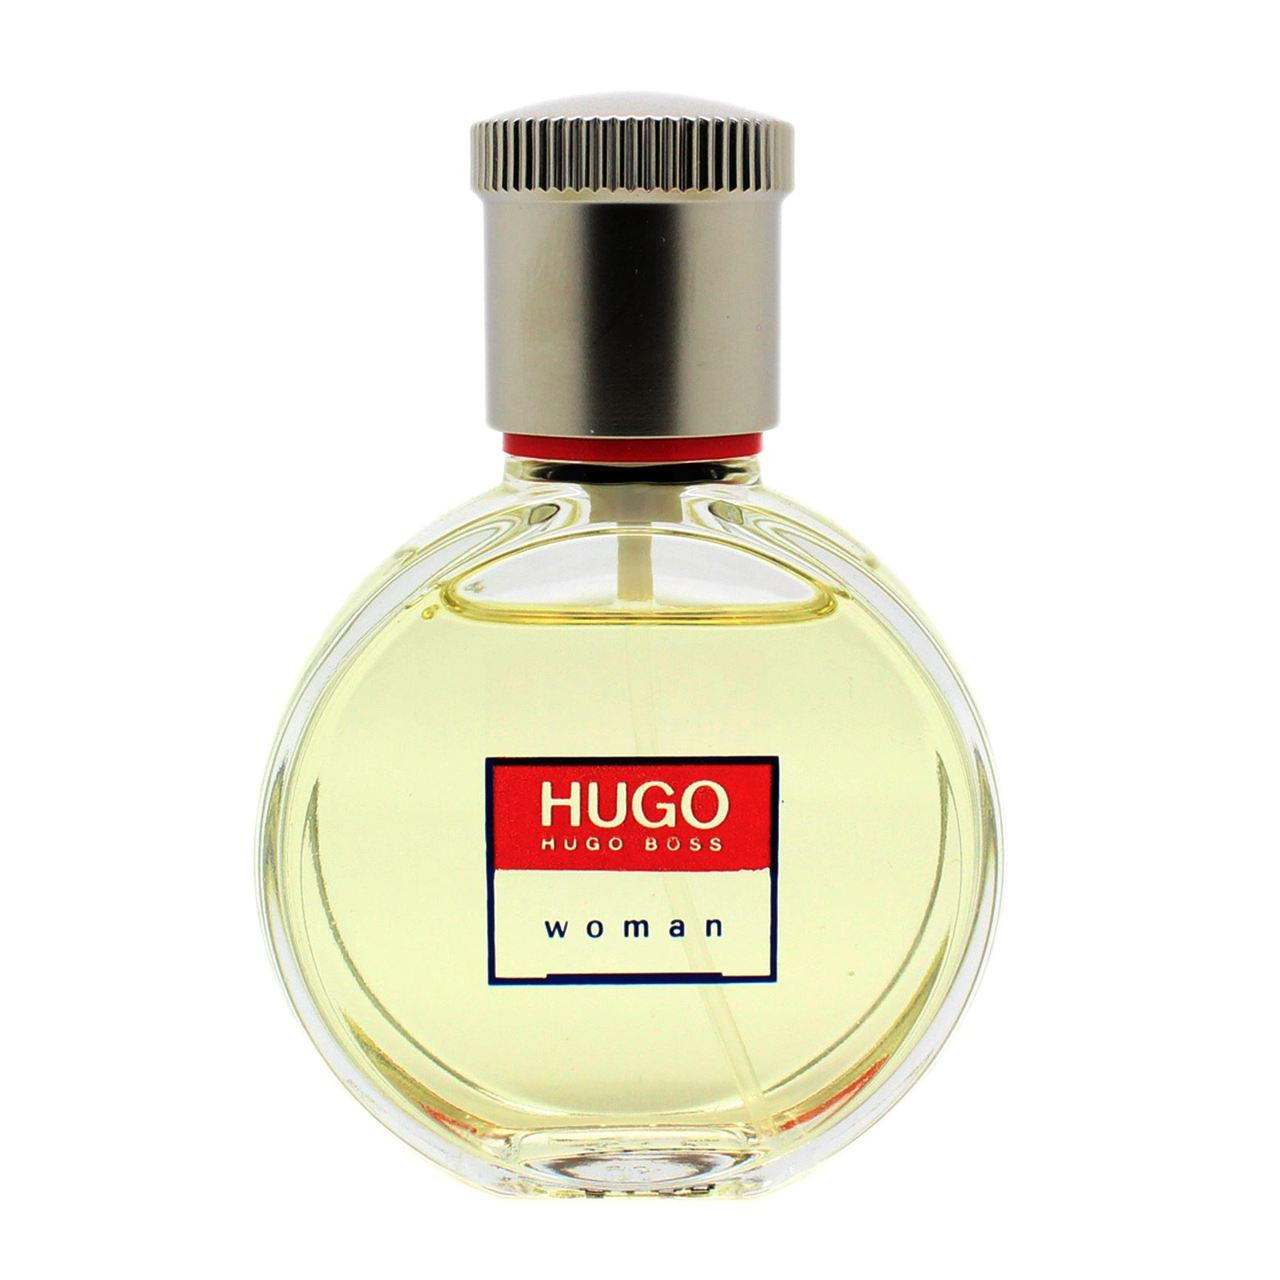 Hugo Boss Woman for Women EDT Purse Spray 25ml - Go Tiny